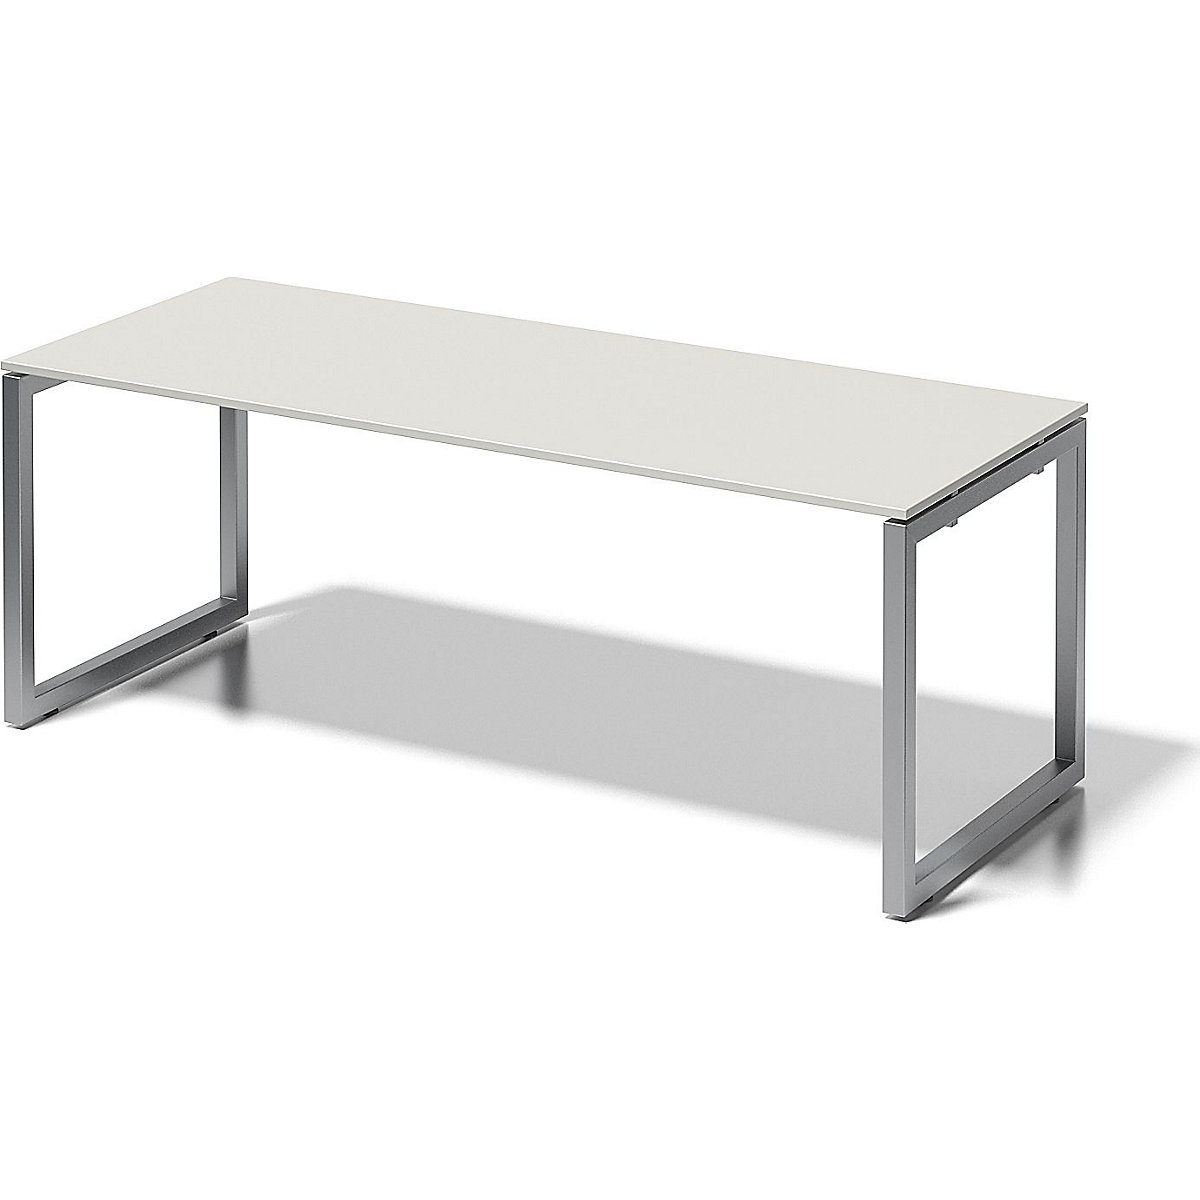 Písací stôl CITO, podstavec v tvare O – BISLEY, v x š x h 740 x 2000 x 800 mm, podstavec strieborná, doska stola šedobiela-7